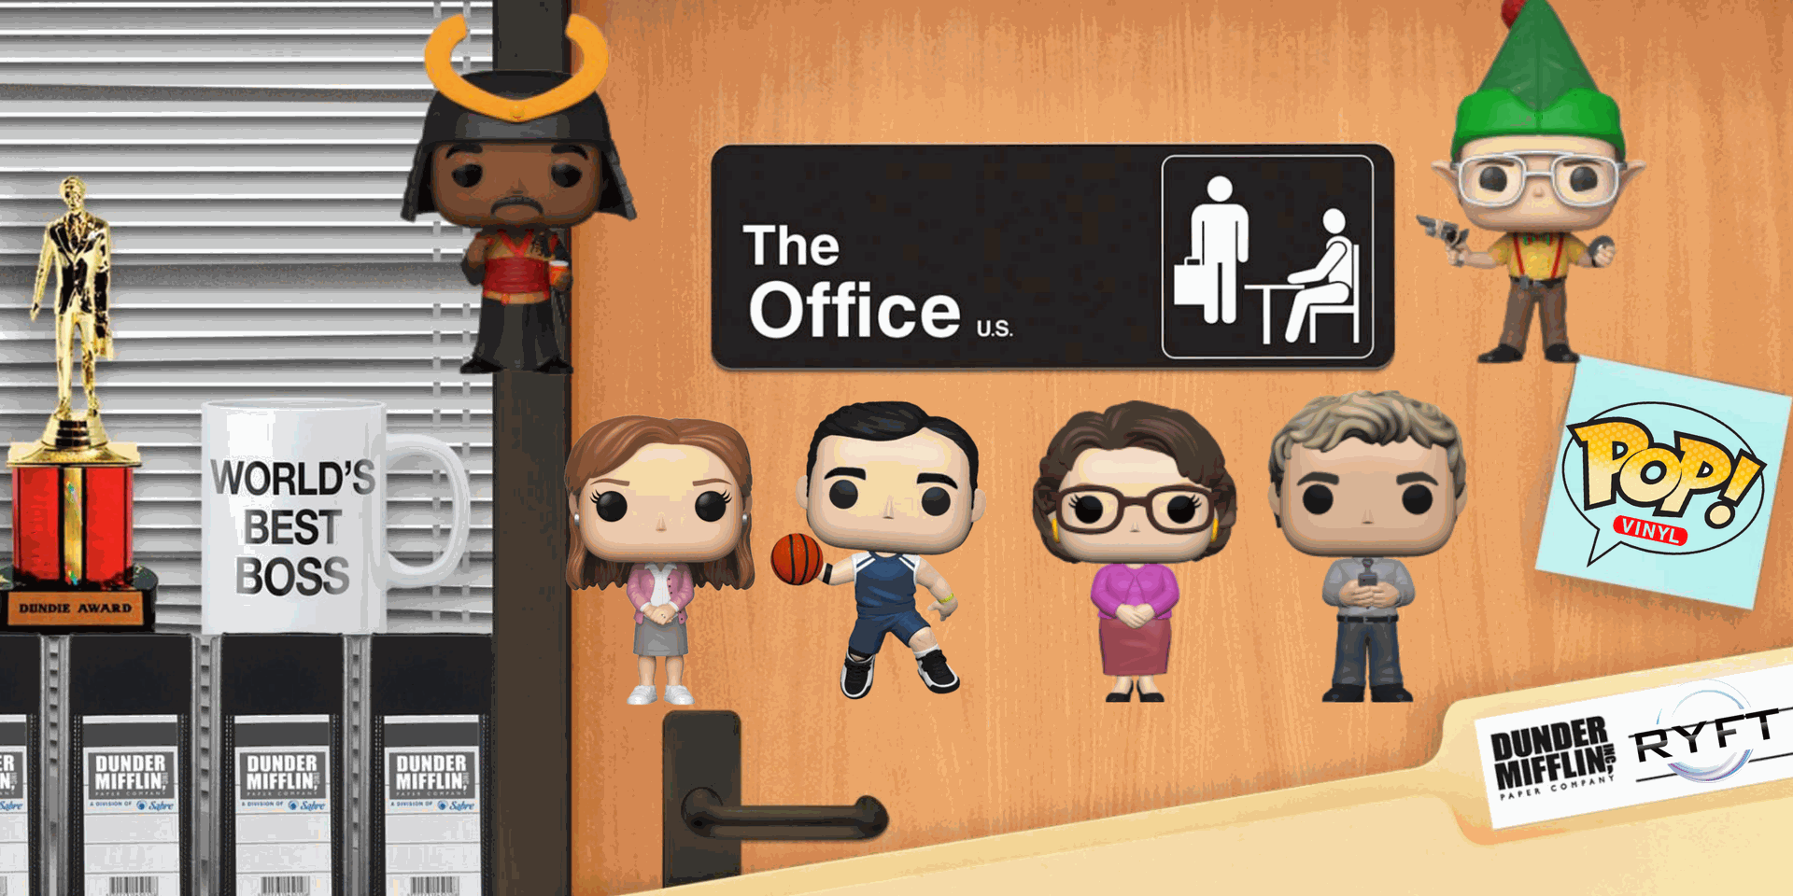 The Office Pop! Vinyl Banner Ryft